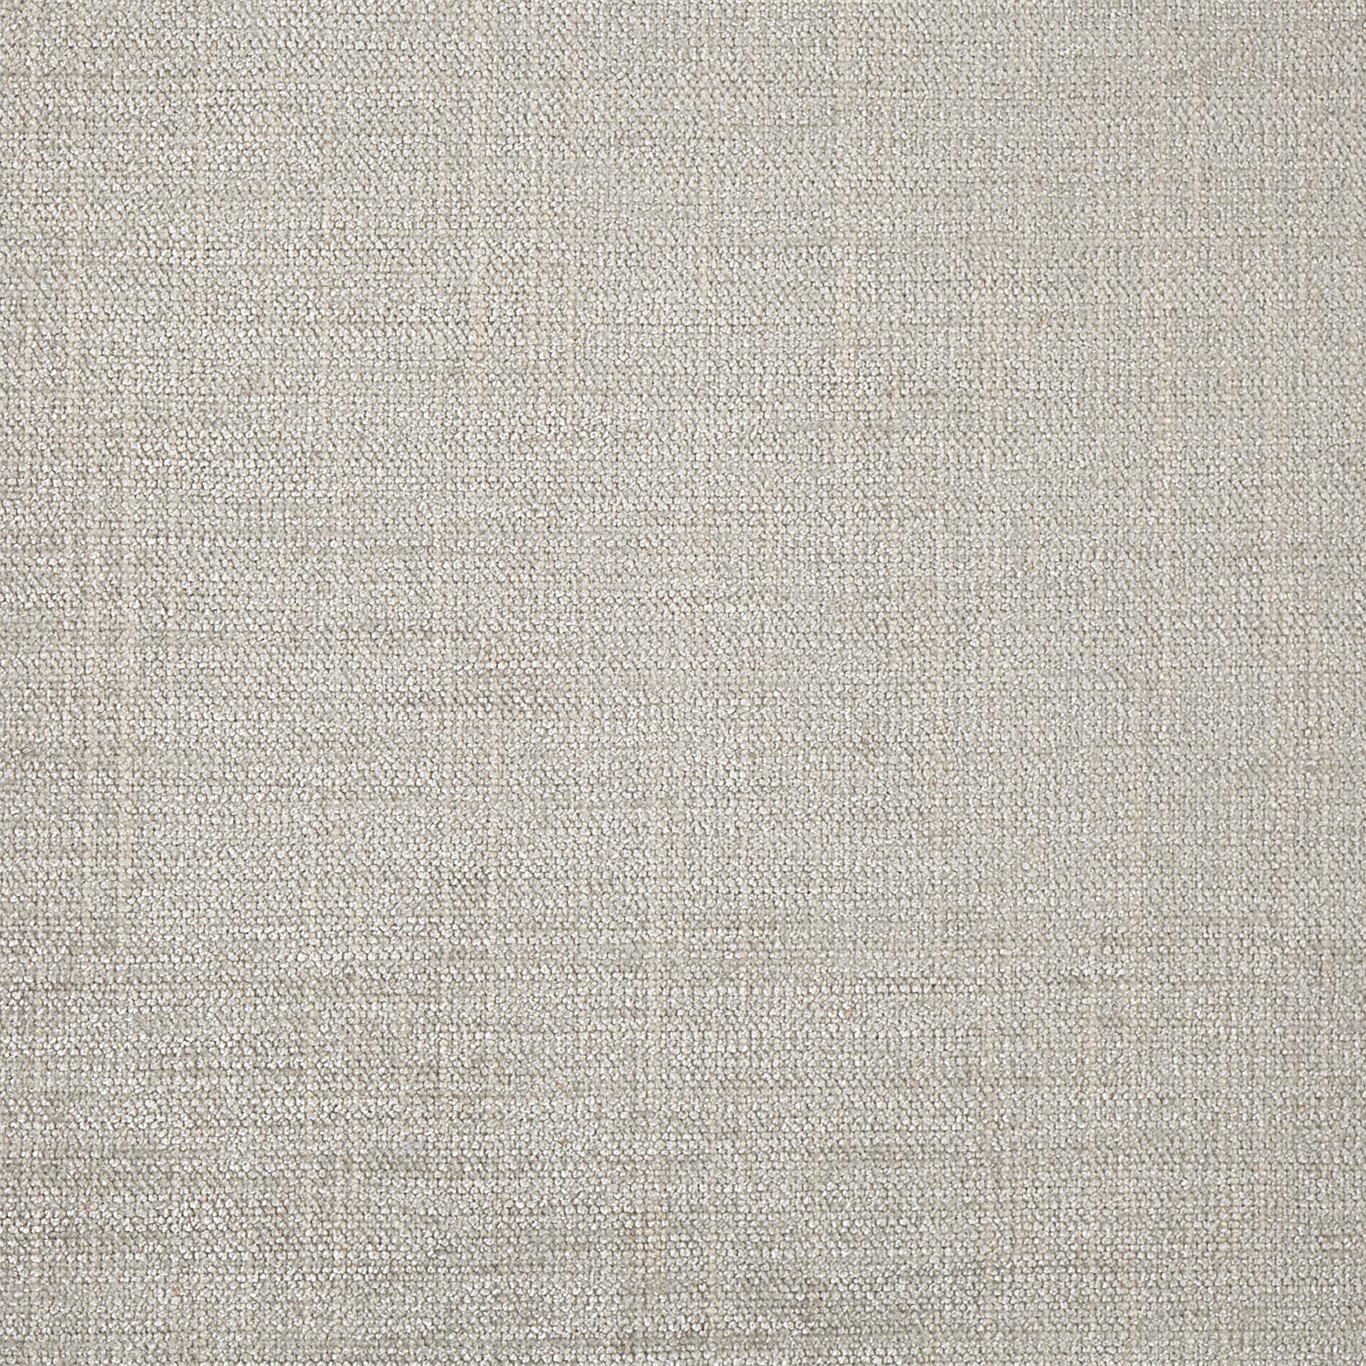 Saroma Plains Stone Fabric by HAR